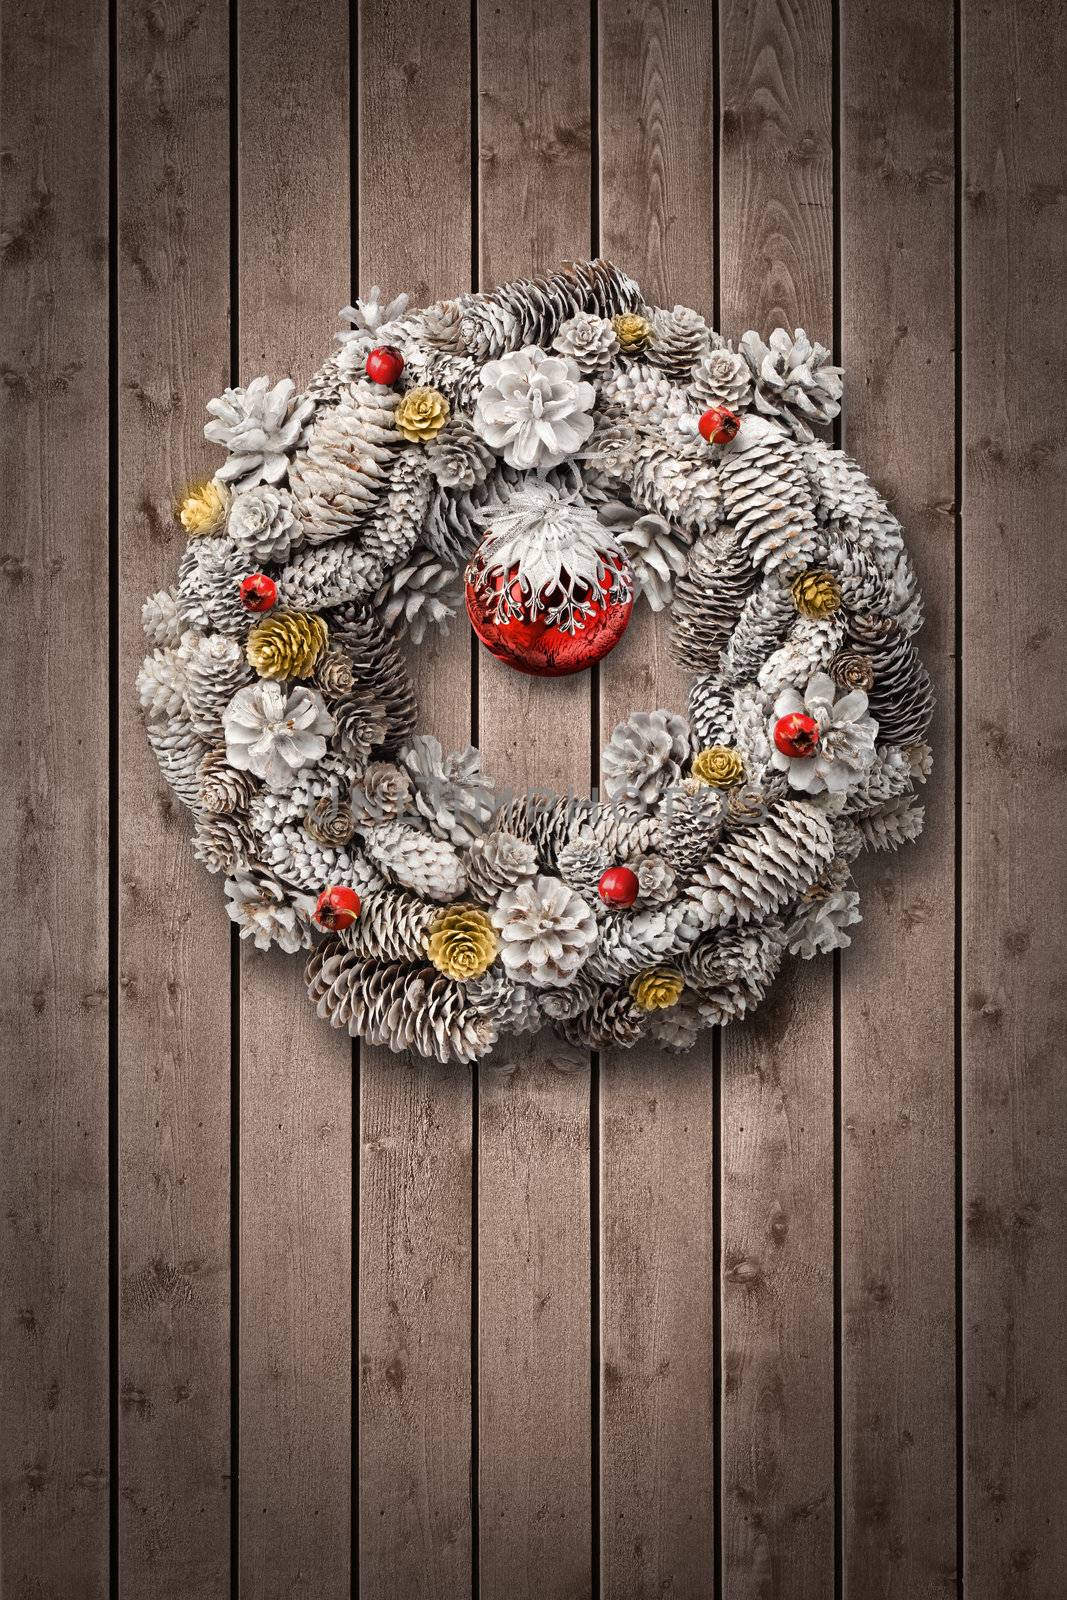 White Christmas wreath on wooden door by anterovium